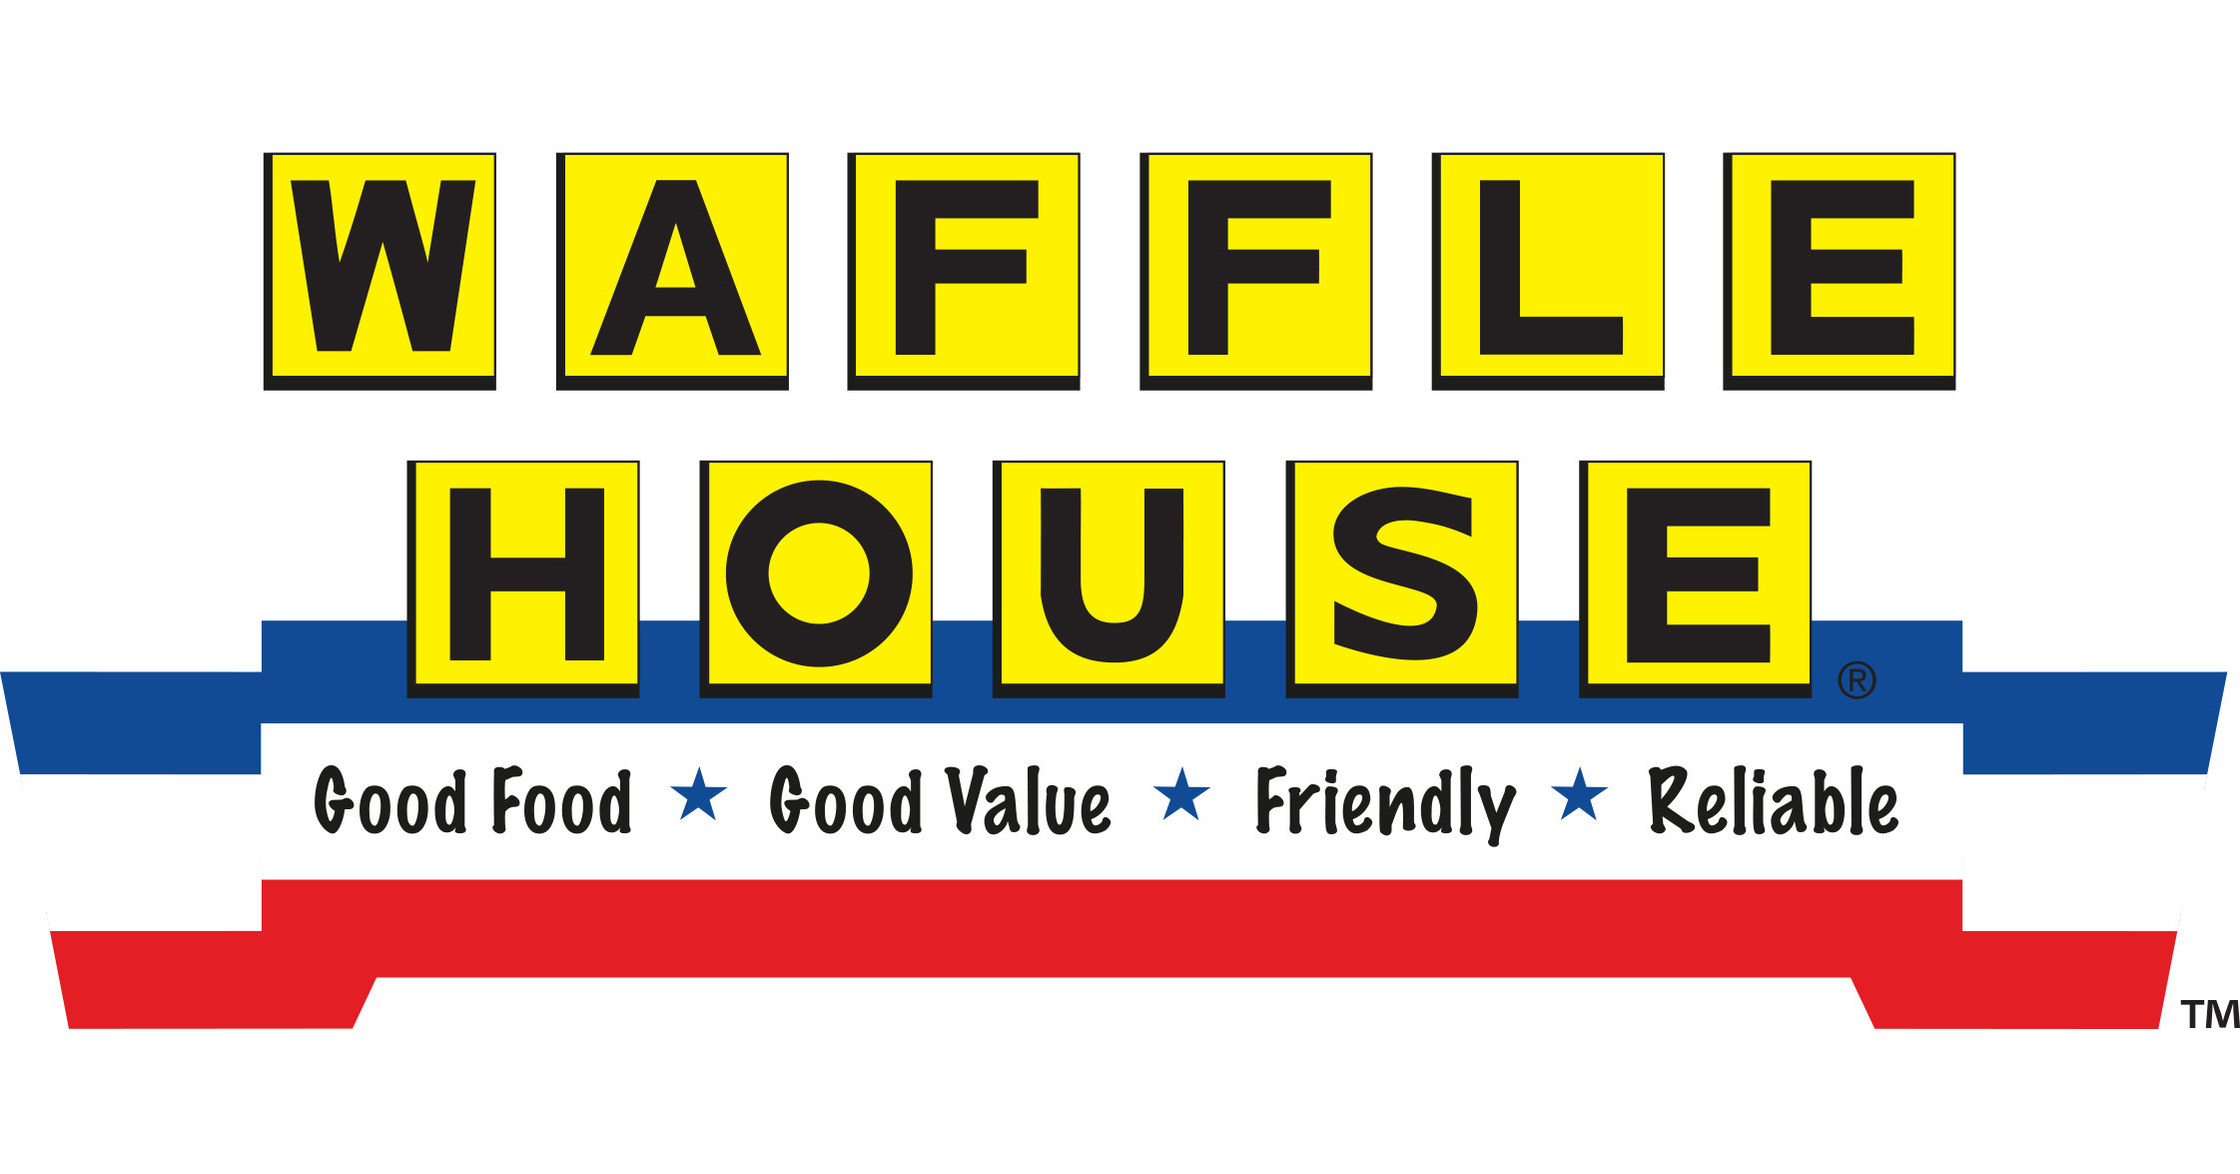 https://mma.prnewswire.com/media/549440/Waffle_House_Logo.jpg?p=facebook